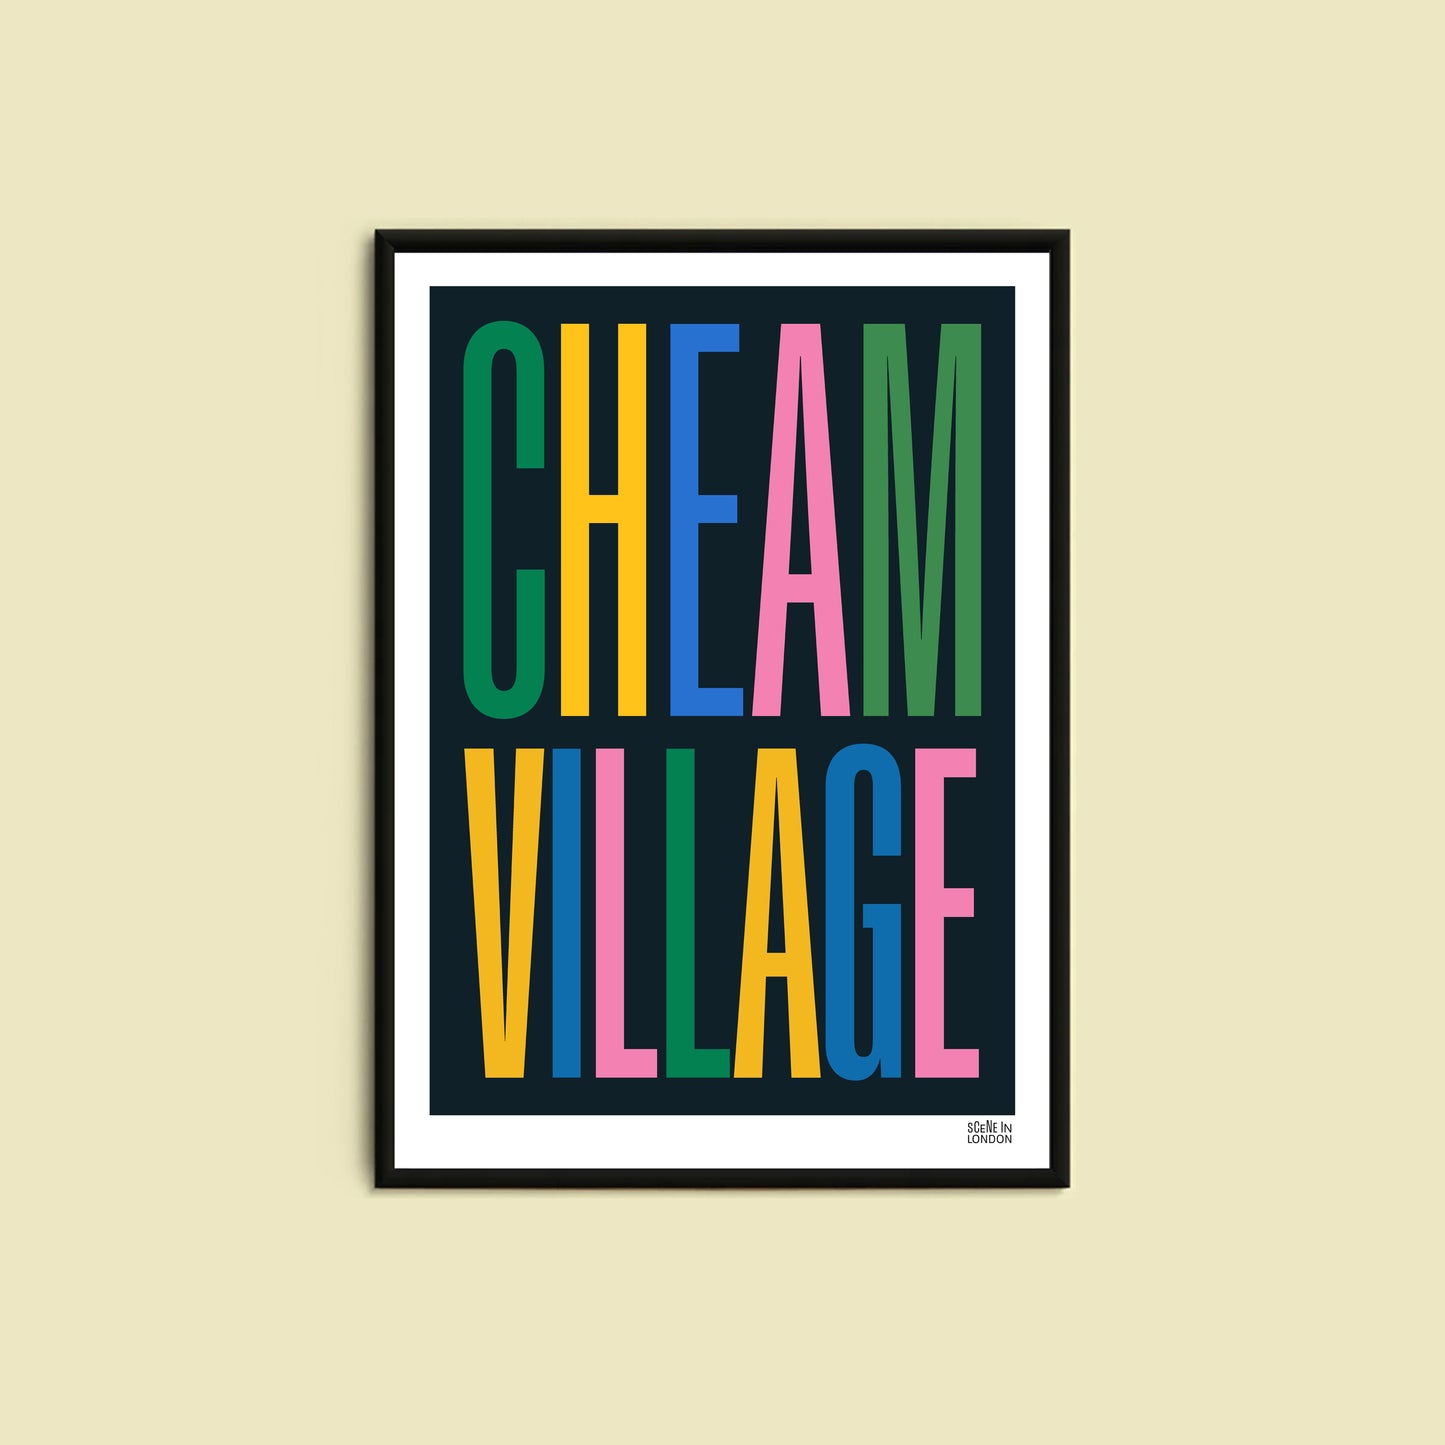 Cheam Village Print